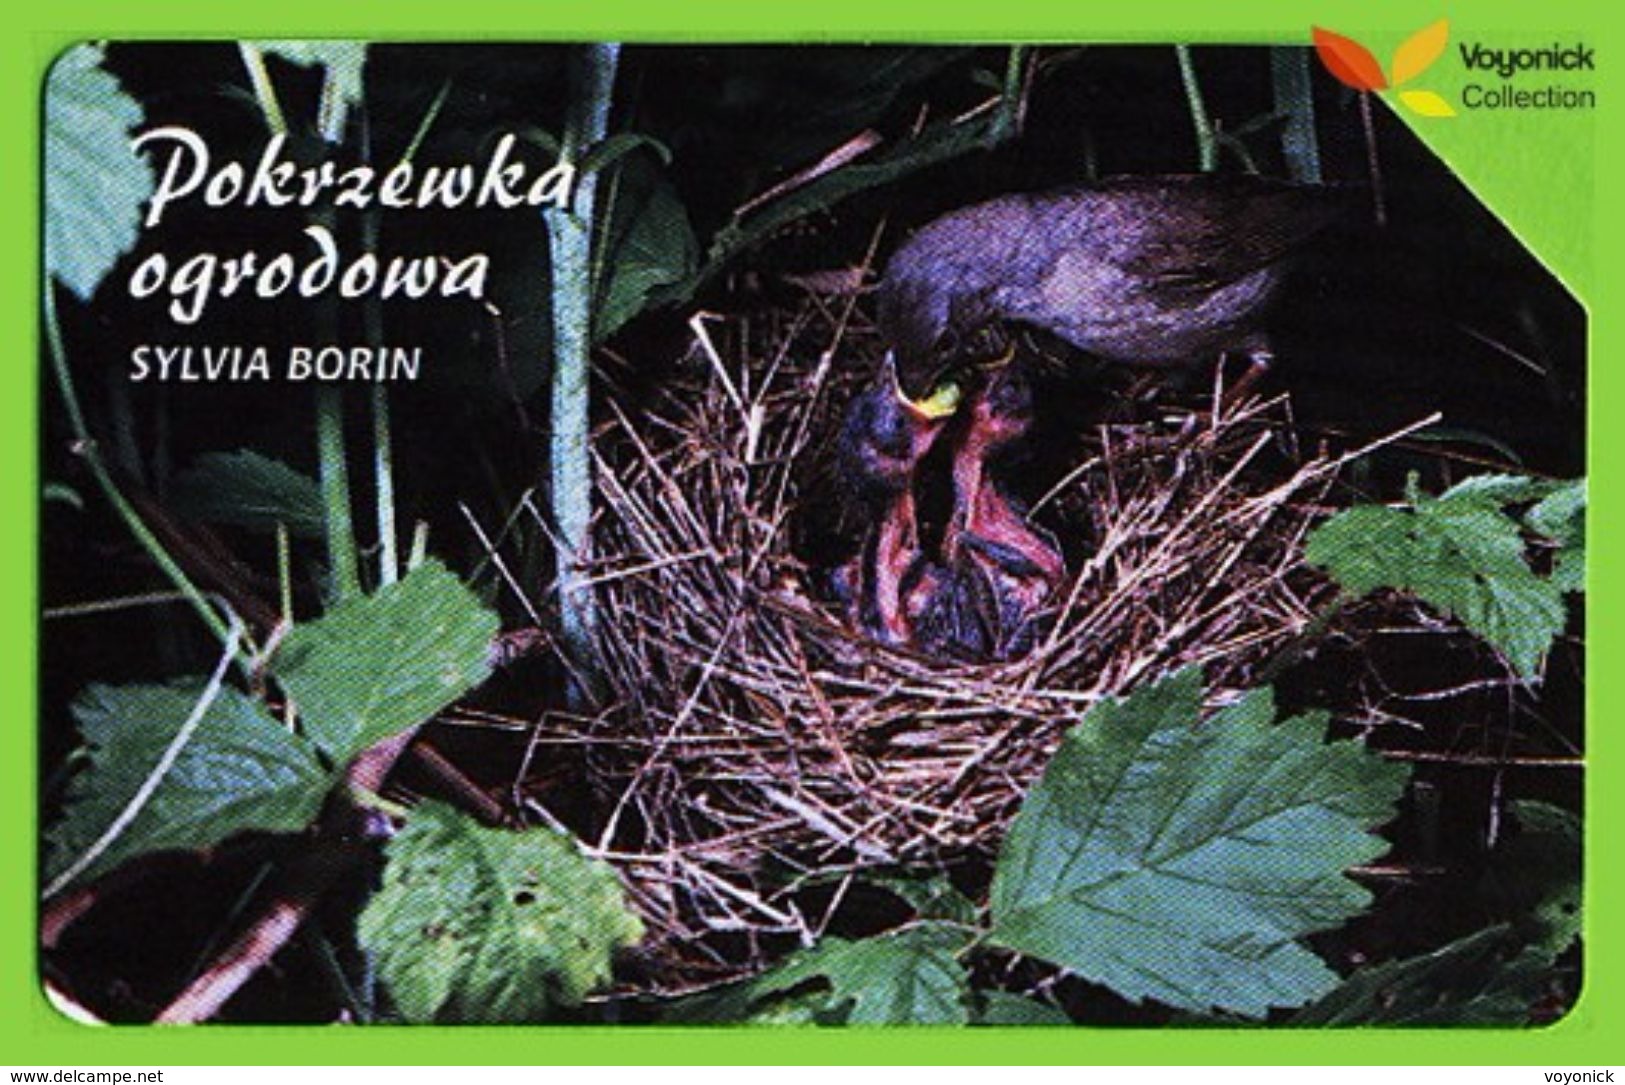 Voyo POLAND Protected Animals GARDEN WARBLER Pokrzewka Ogrodowa - Sylvia Borin - Used Phone Card 2002 # 1345 - Polen